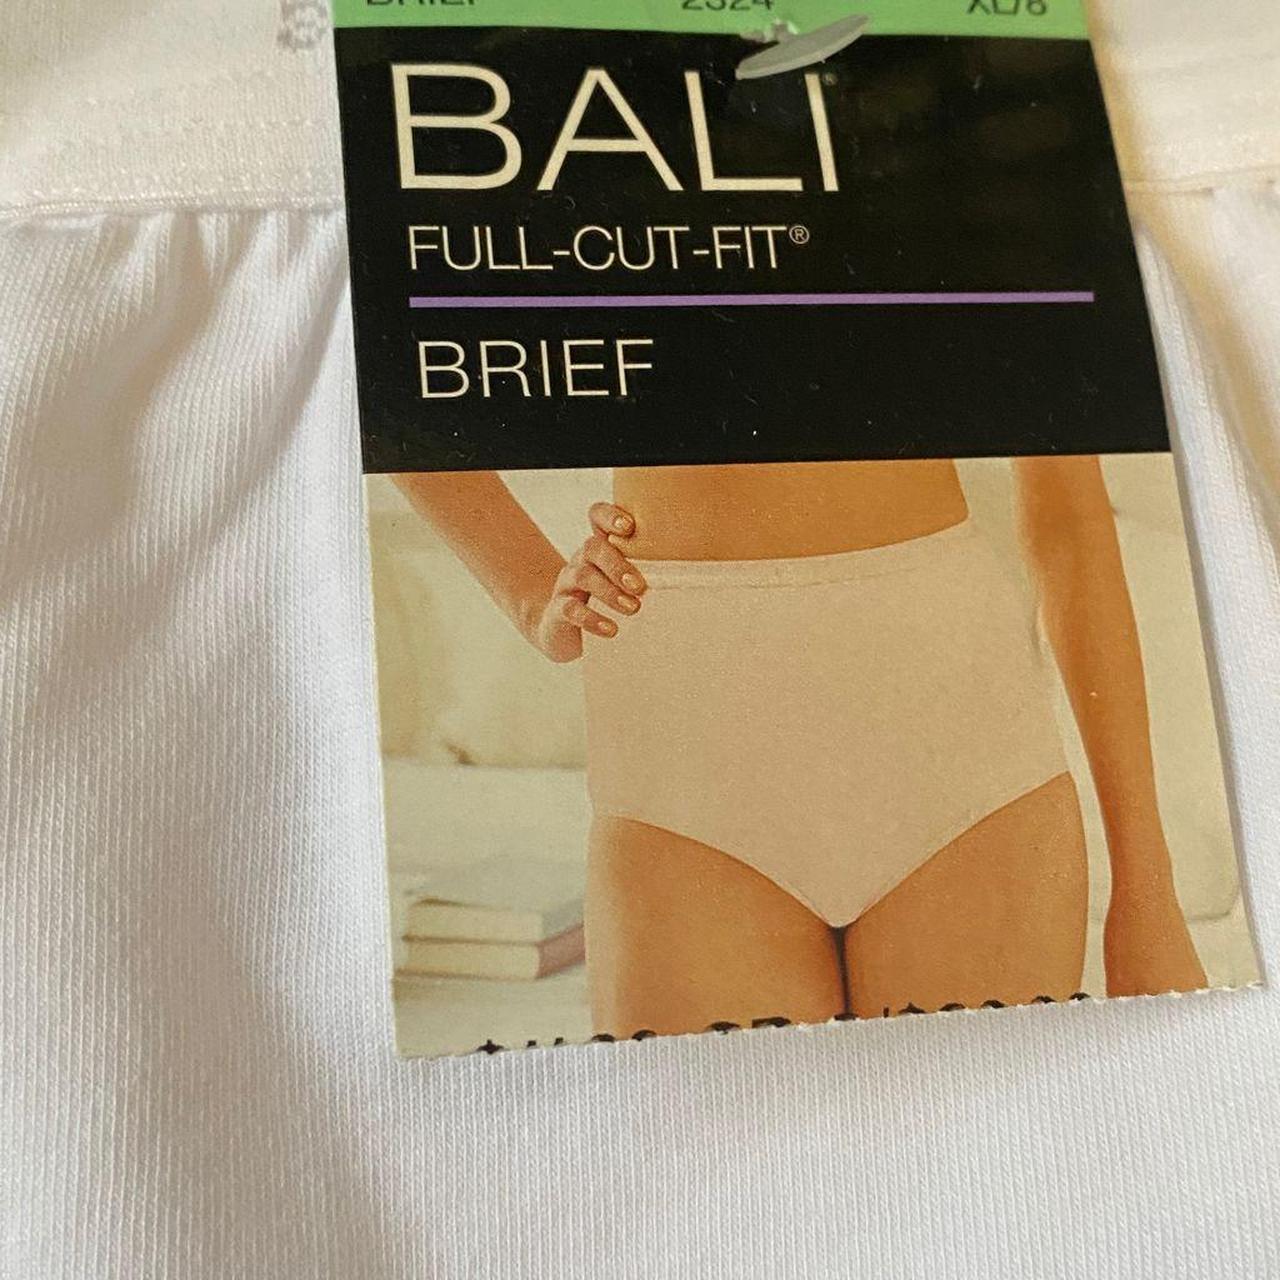 Bali Full-Cut-Fit Brief